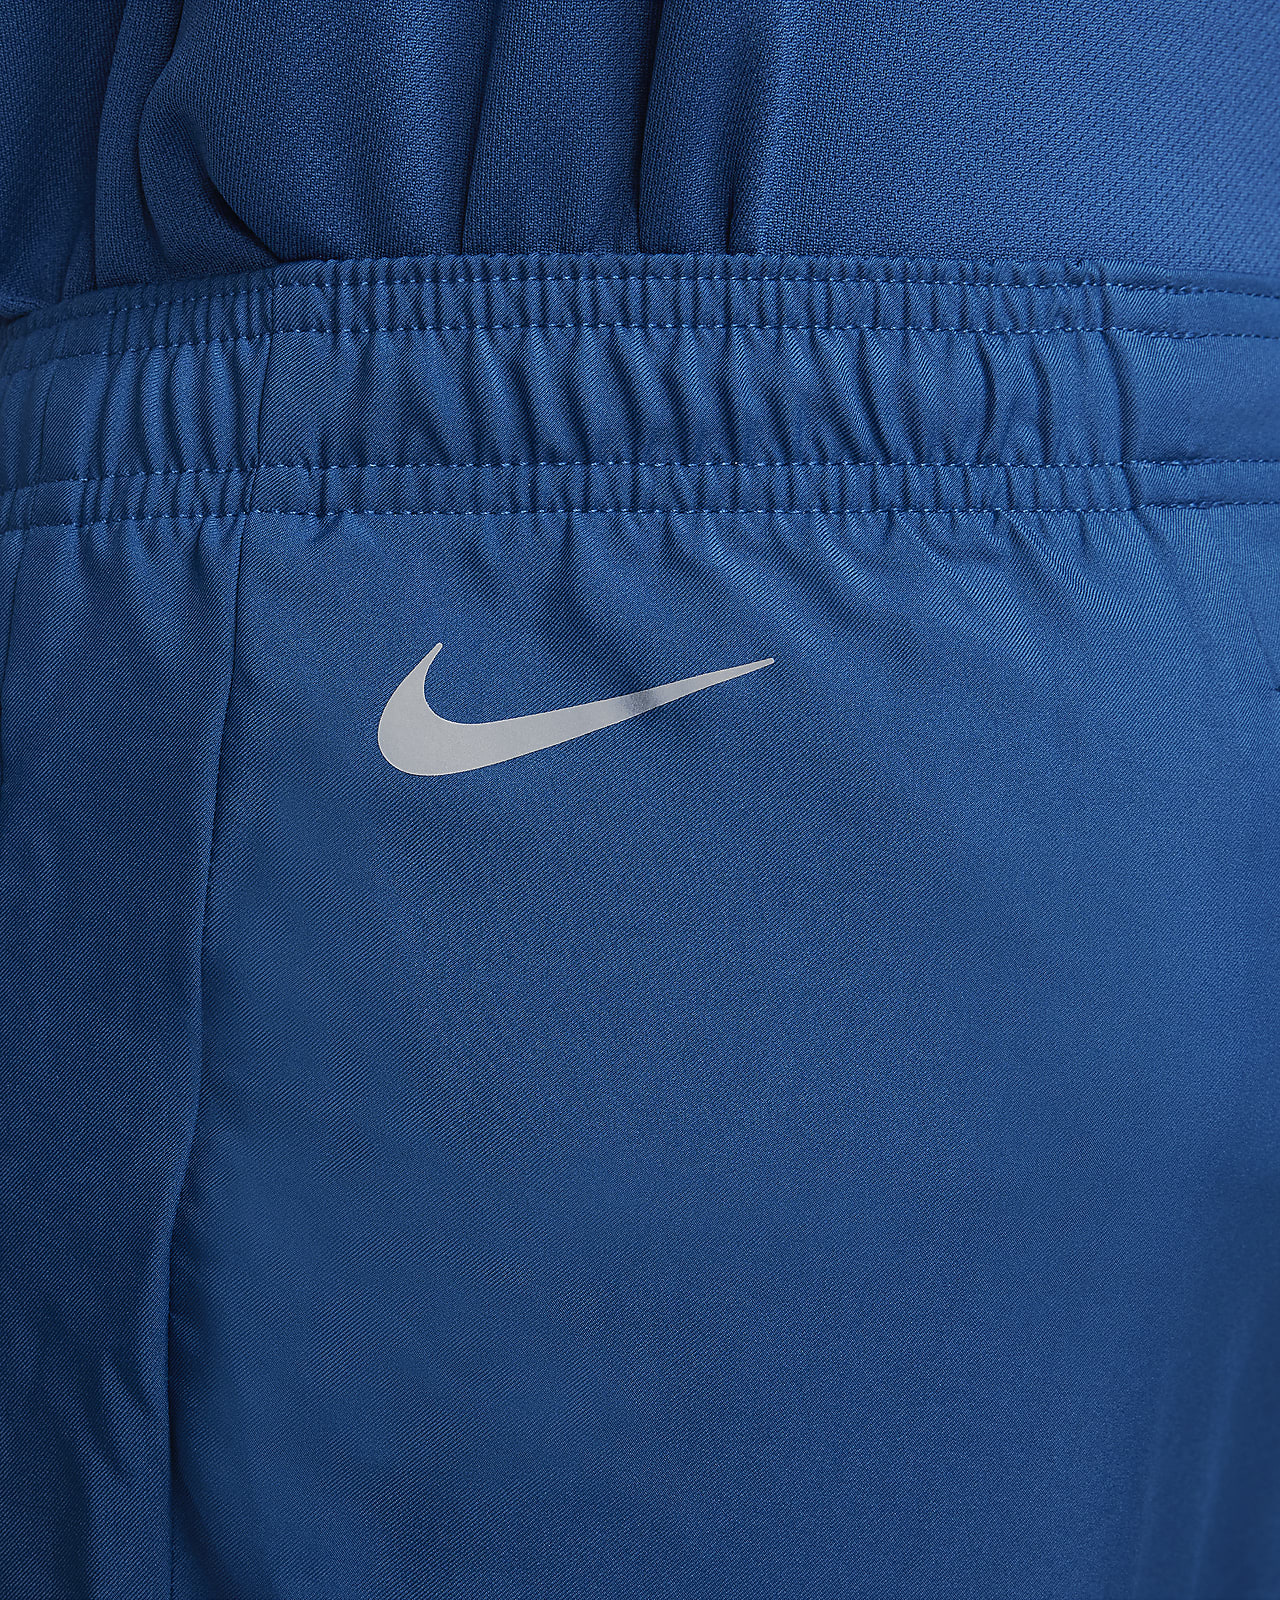 Nike Tech Half Tights Mens Running Pants - Pants - Running Clothing -  Running - All